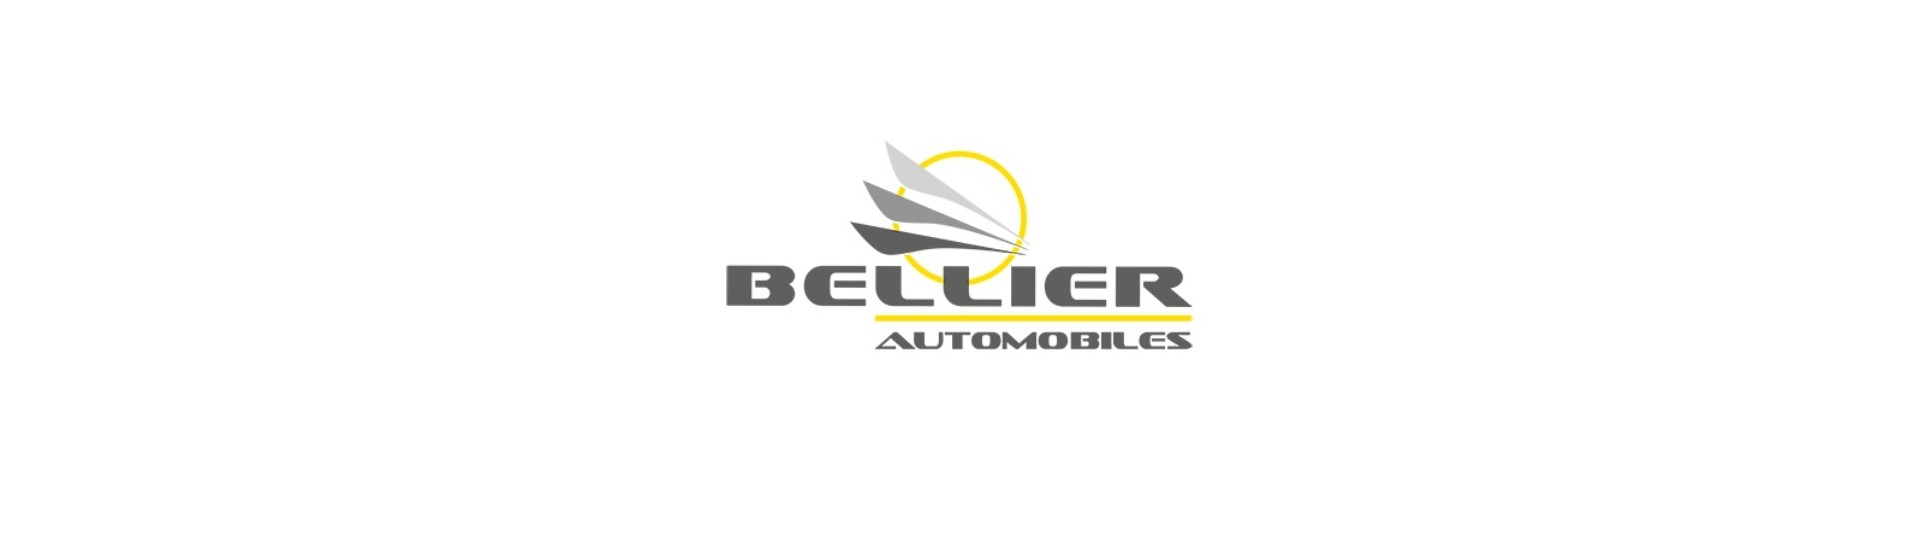 Relais / electronic car module without a permit Bellier